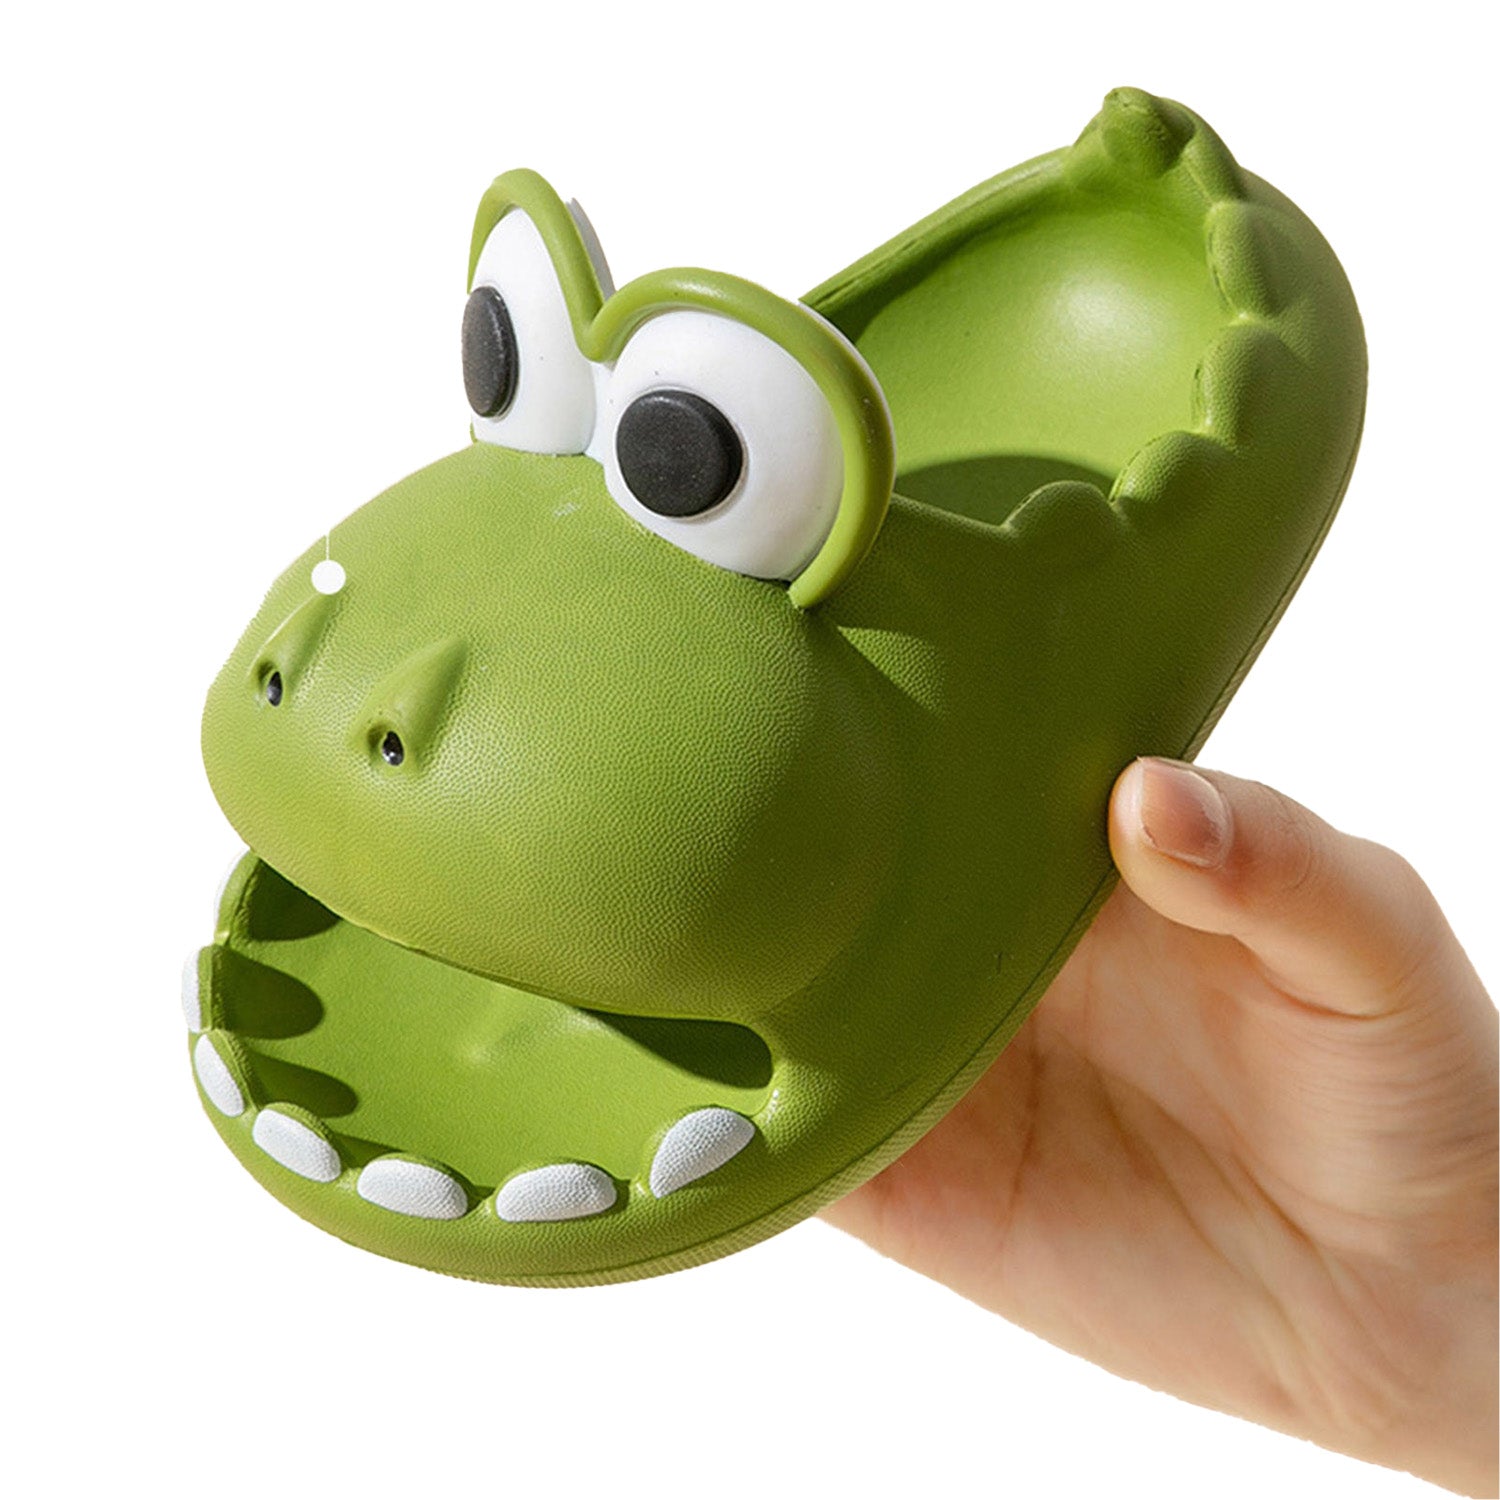 Baby Moo Crocodile Beach Slippers 3D Cartoon Sliders - Green - Baby Moo